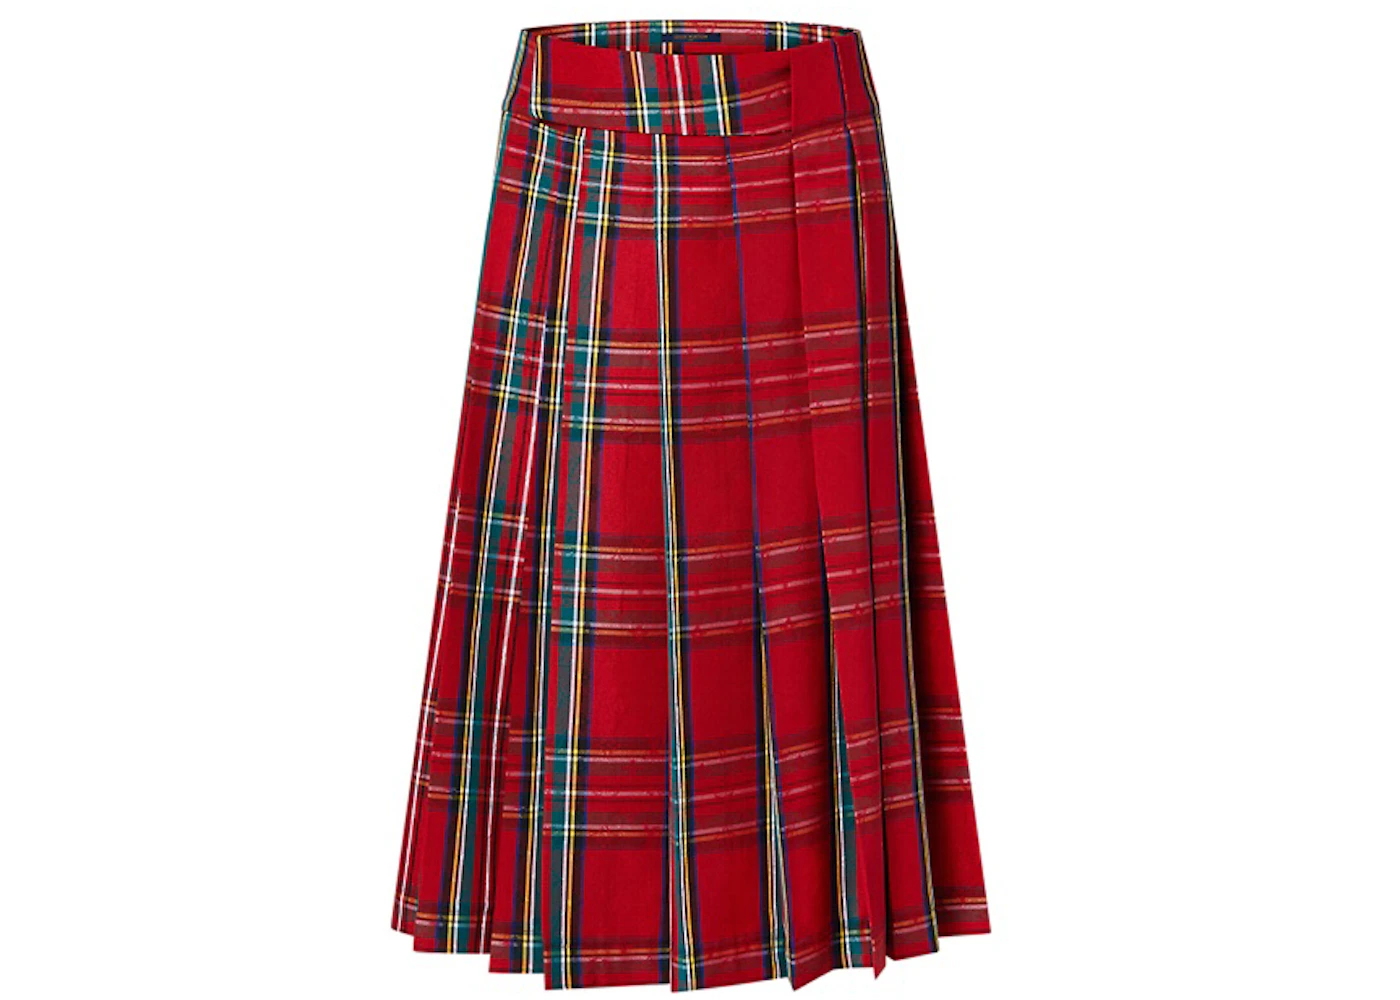 Louis Vuitton Scallop Detail A-Line Mini Skirt Bright Red. Size 34